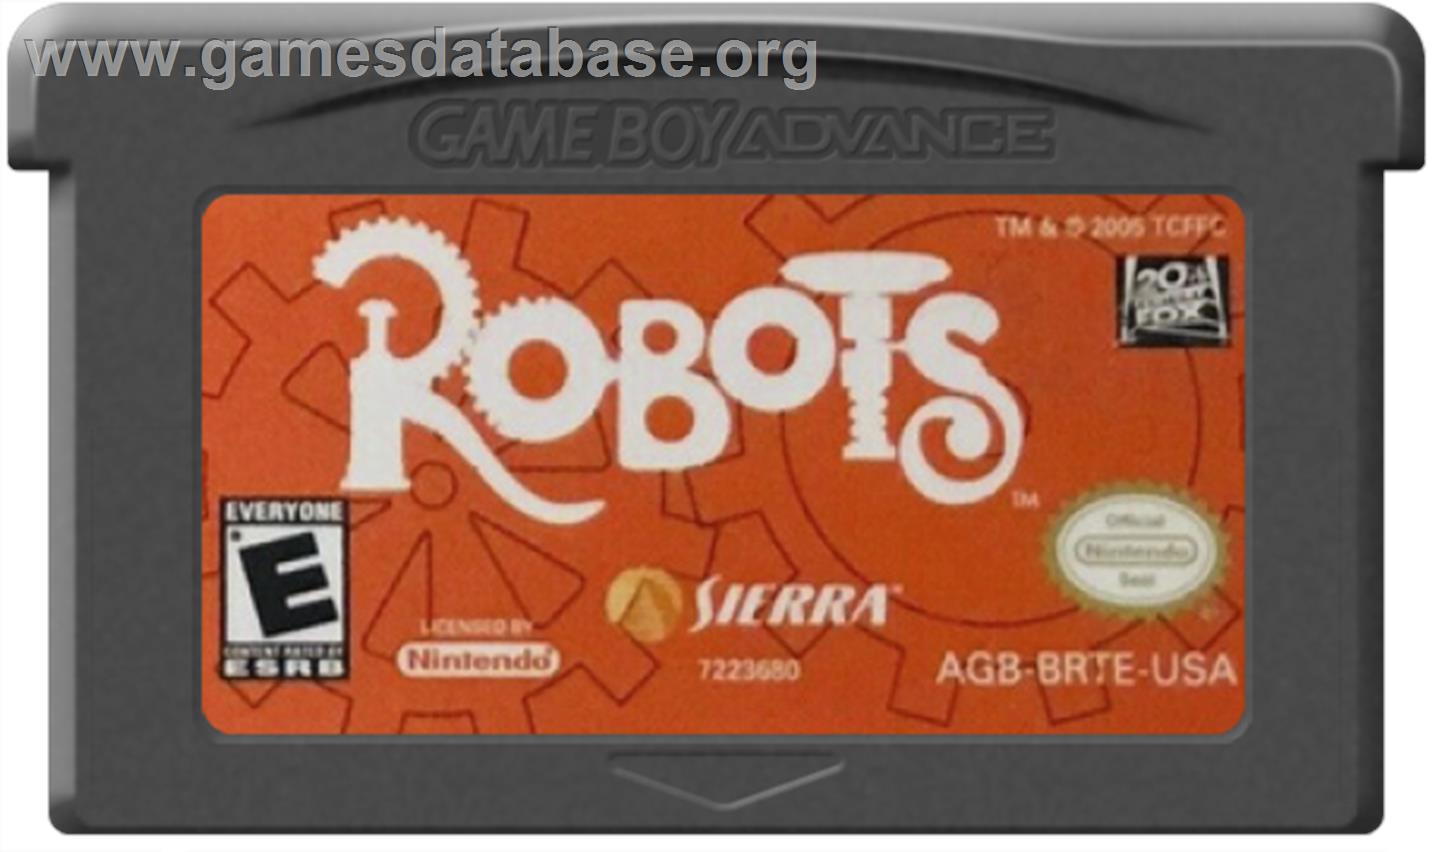 Robots - Nintendo Game Boy Advance - Artwork - Cartridge